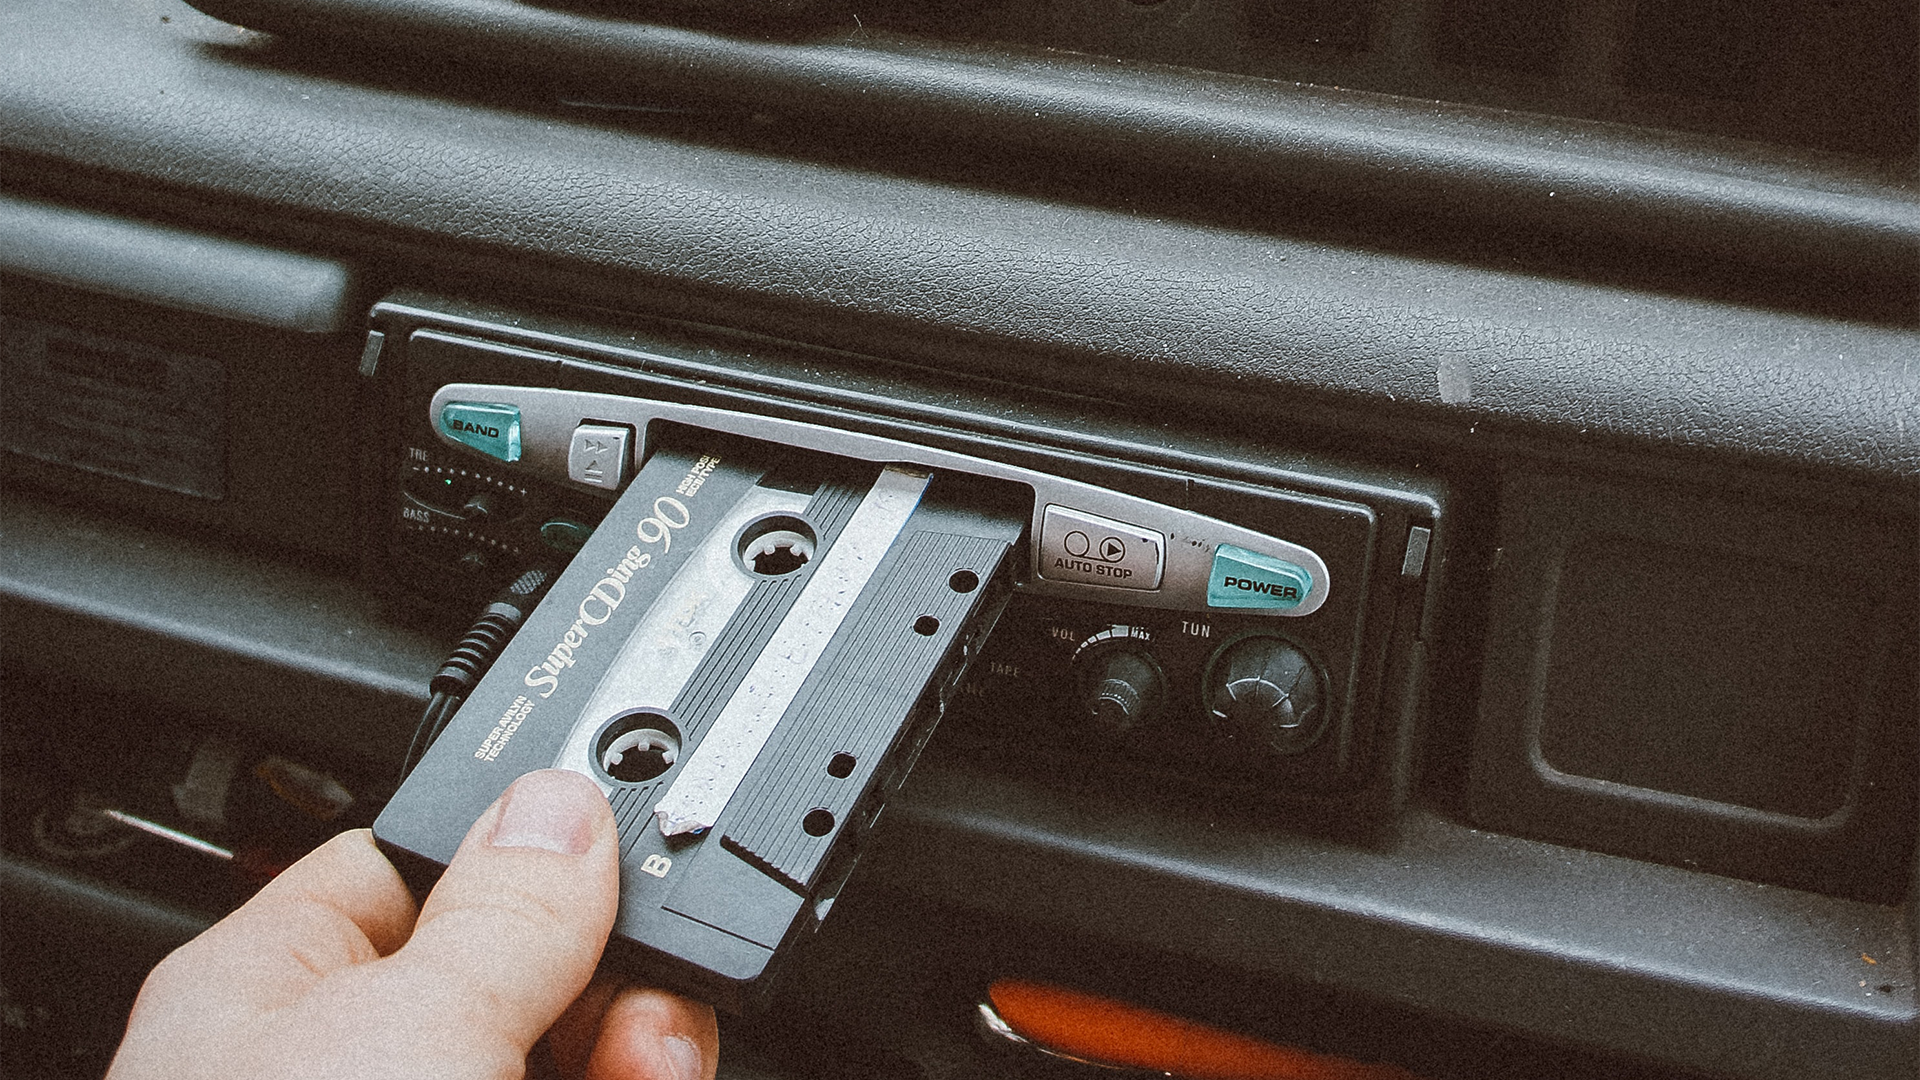 hand placing cassette into car slot